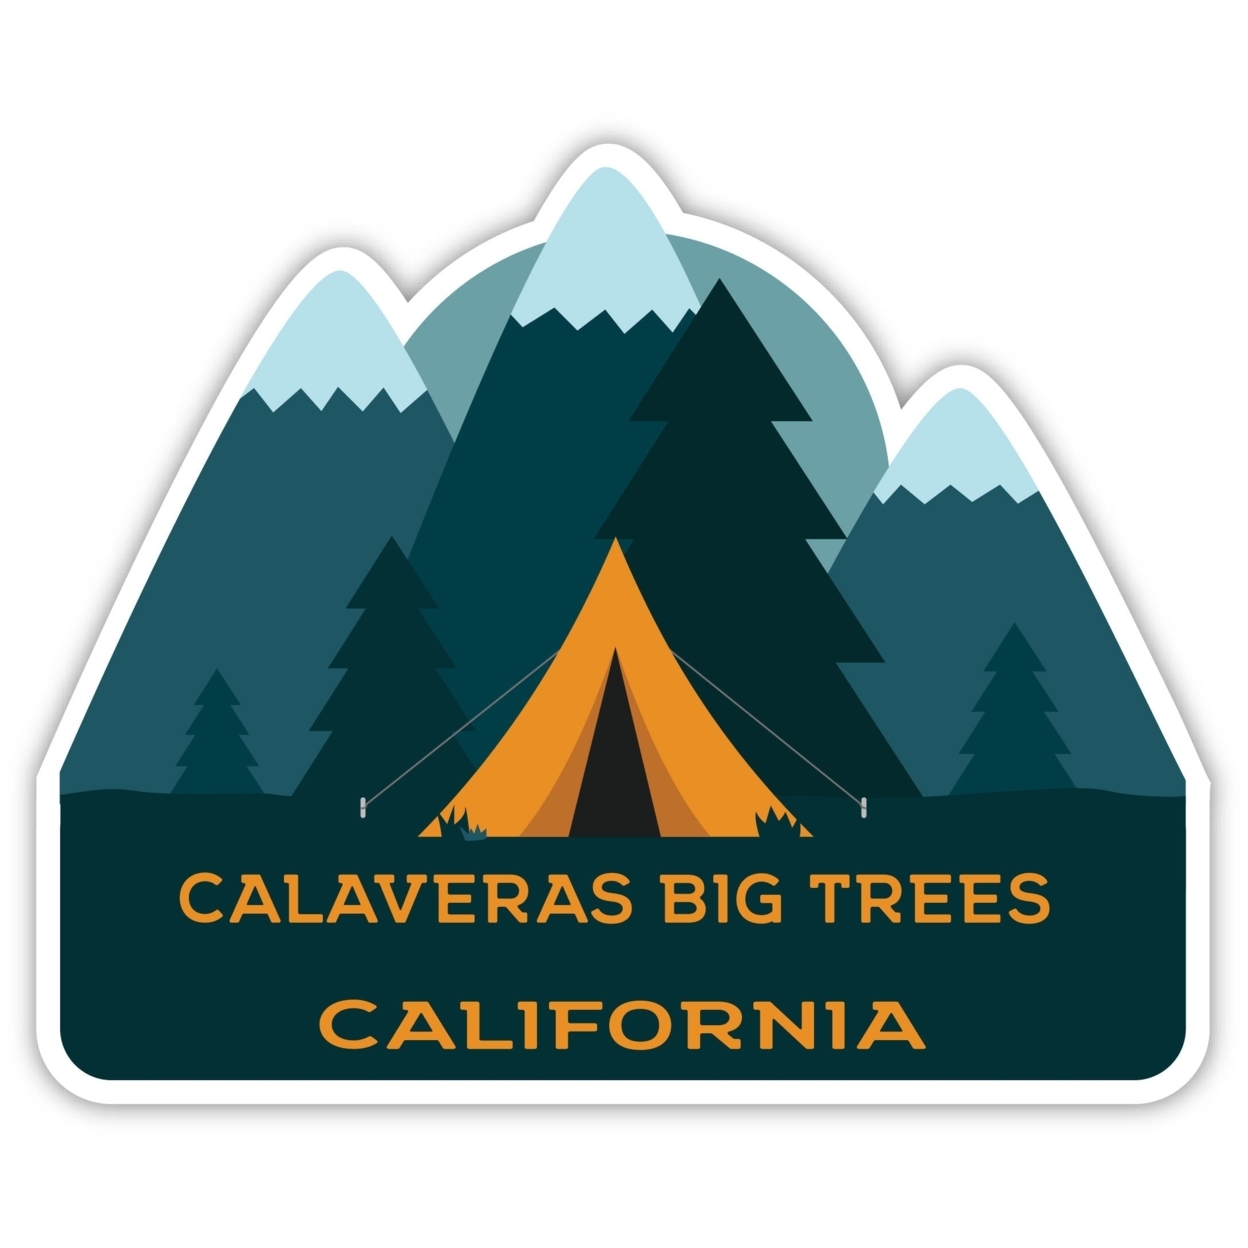 Calaveras Big Trees California Souvenir Decorative Stickers (Choose Theme And Size) - Single Unit, 8-Inch, Tent